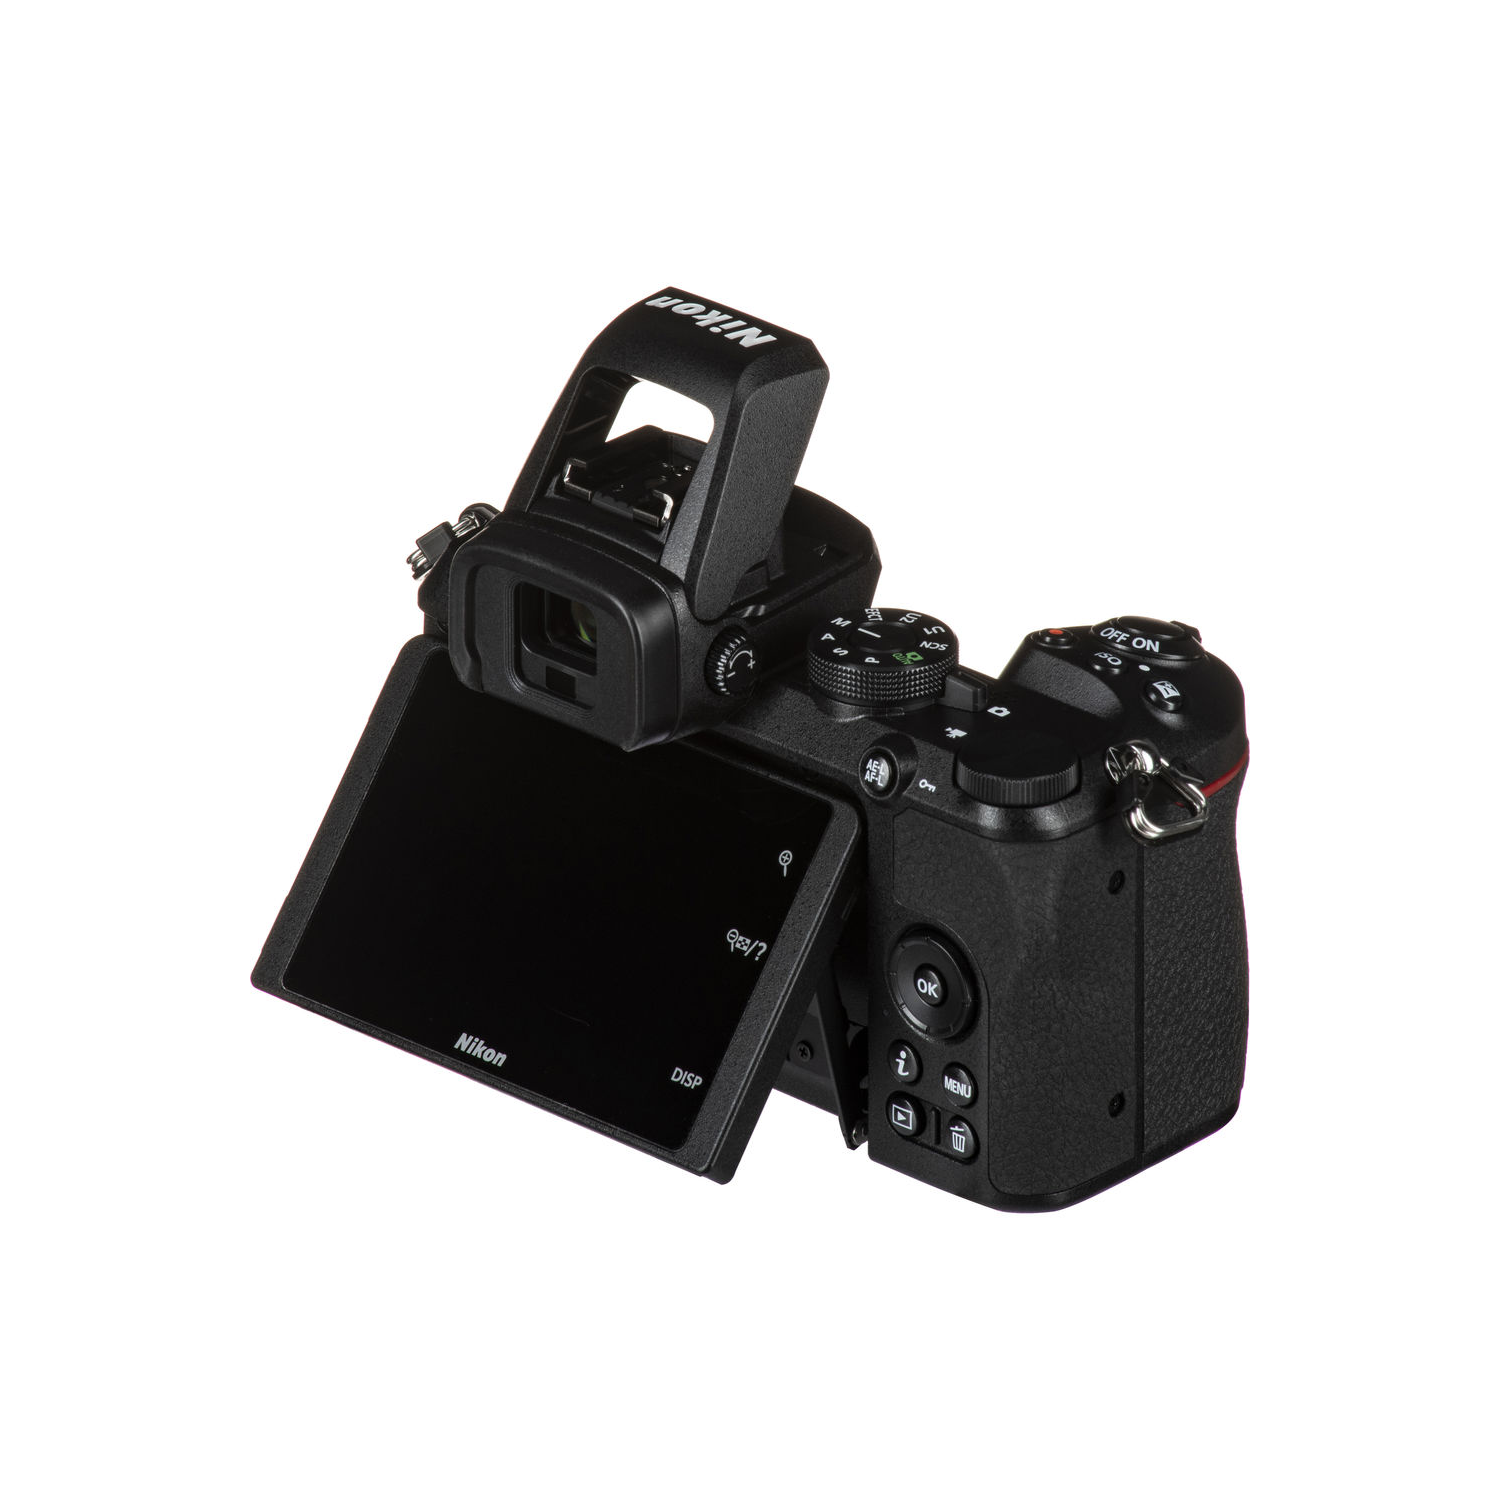 Nikon Z50 Mirrorless Camera